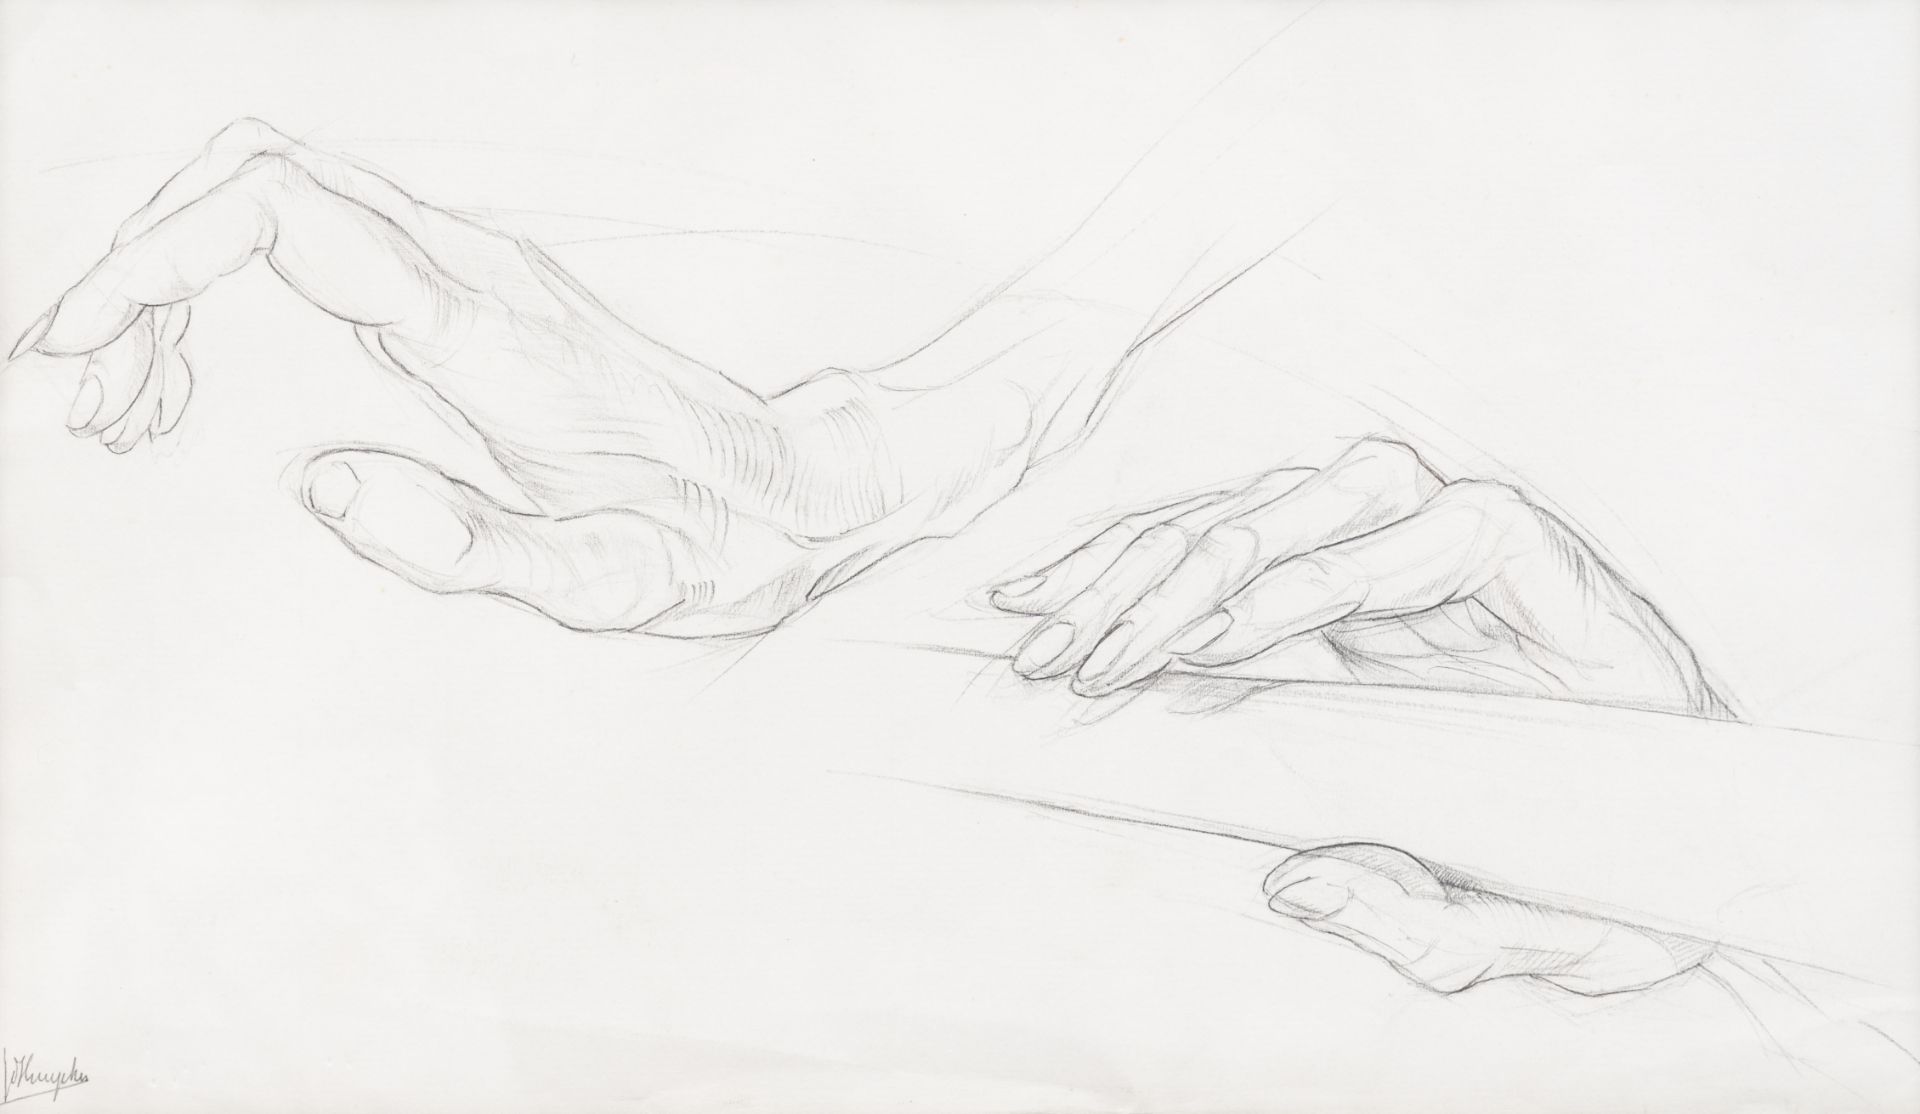 Jules De Bruycker (1870-1945): Hand studies, pencil on paper